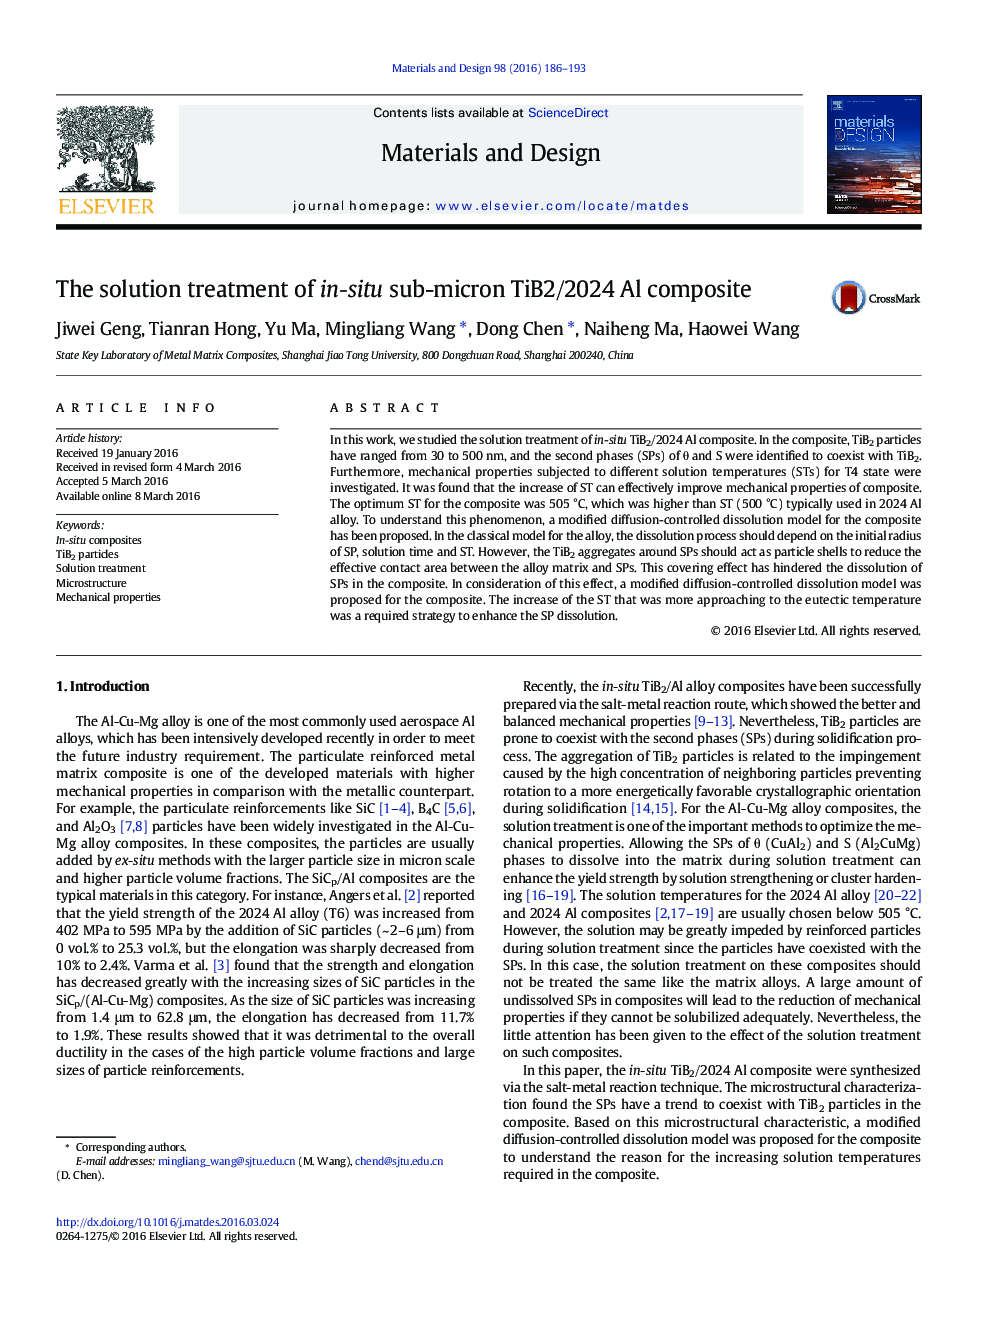 The solution treatment of in-situ sub-micron TiB2/2024 Al composite